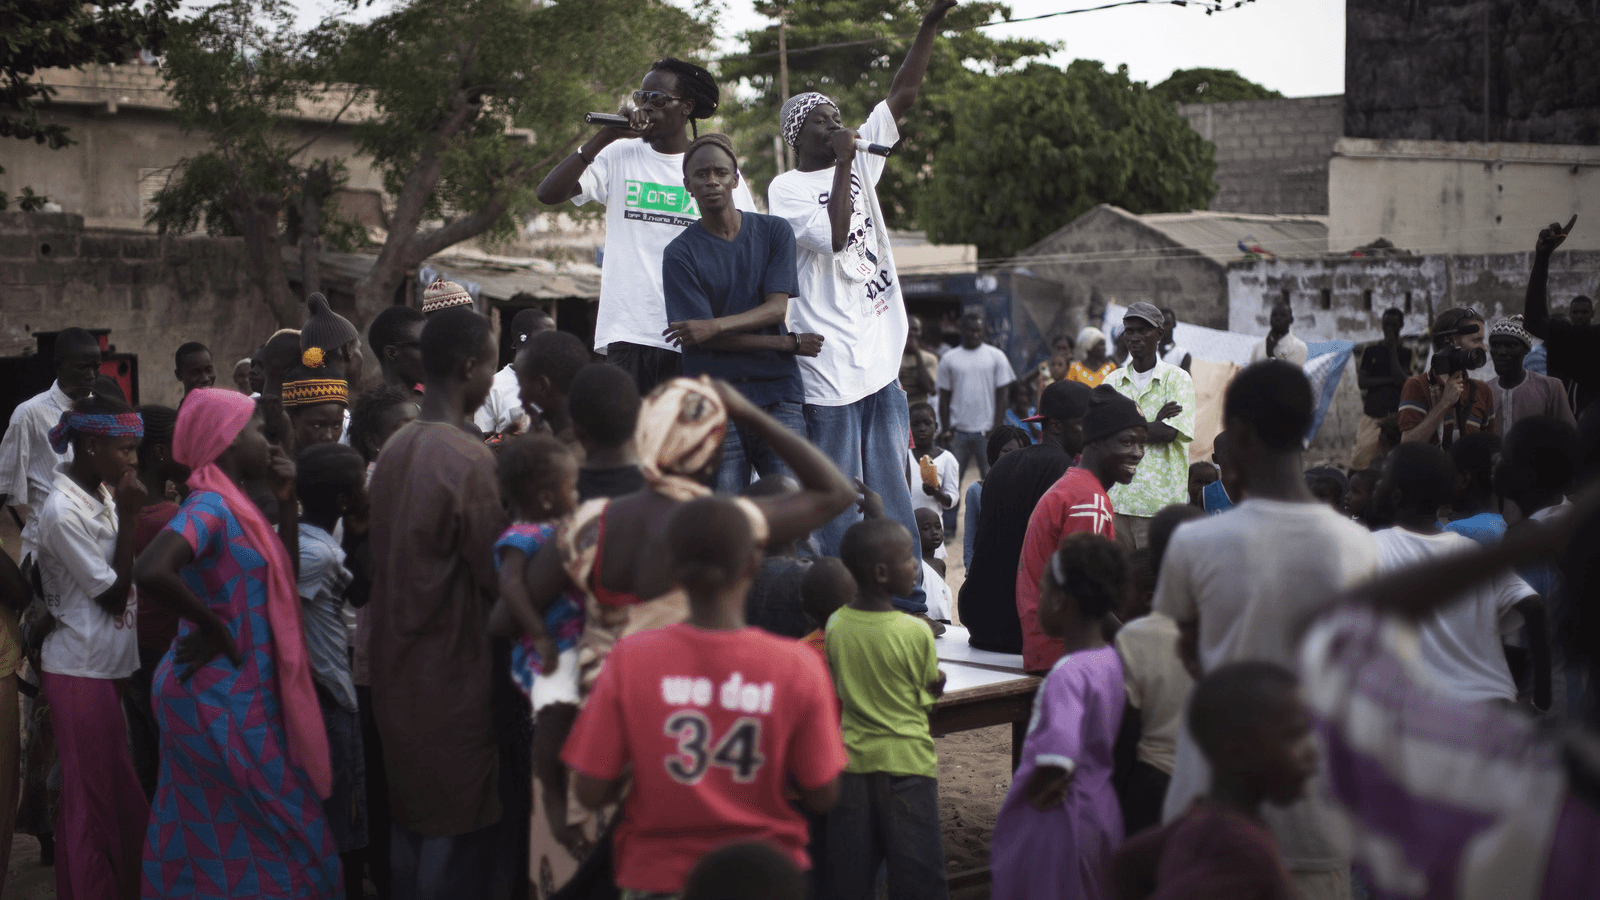 Members of the hip-hop group Y'en a marre perform during a community concert in the Dalifort neighbourhood of Senegal's capital Dakar, June 18, 2011. 